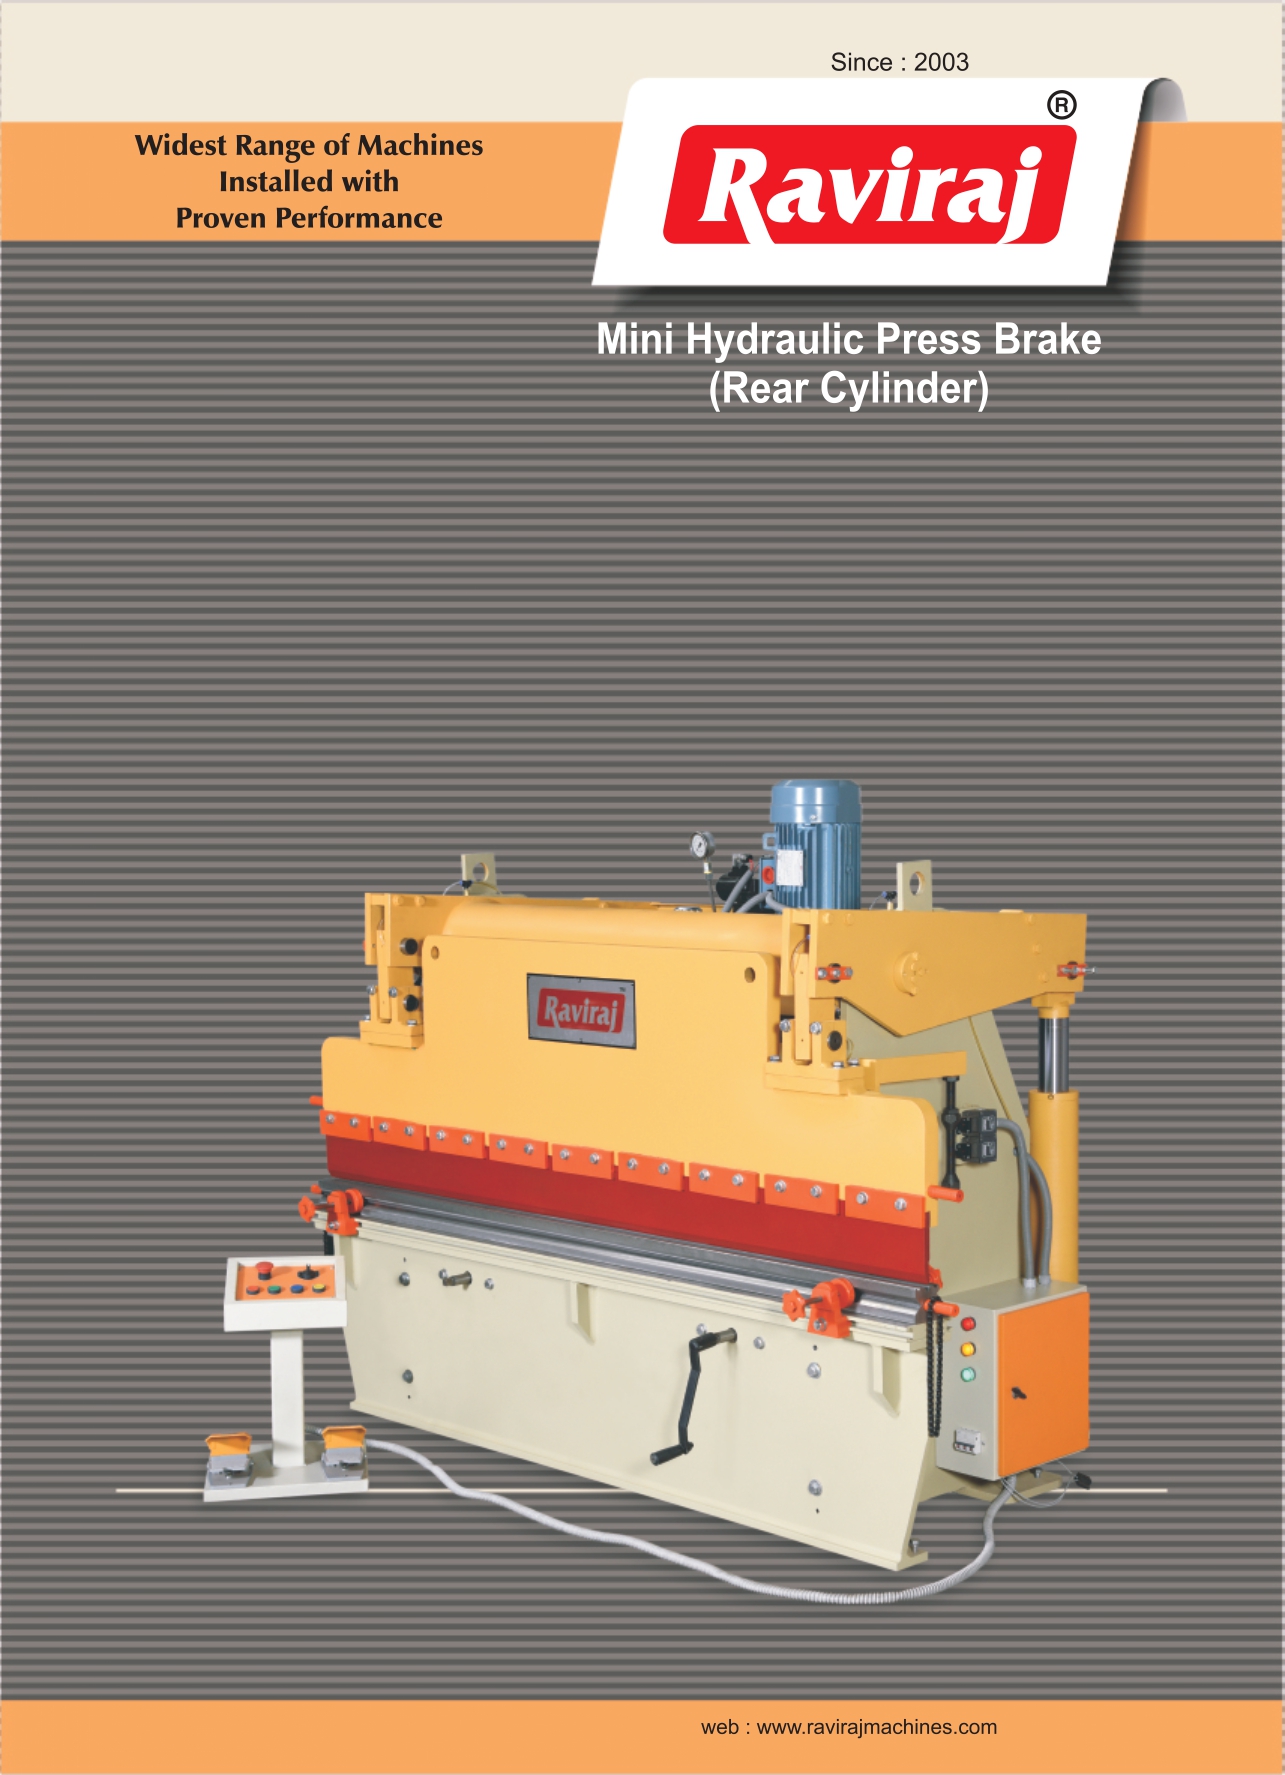 Mini Hydraulic Press Brake Brochure